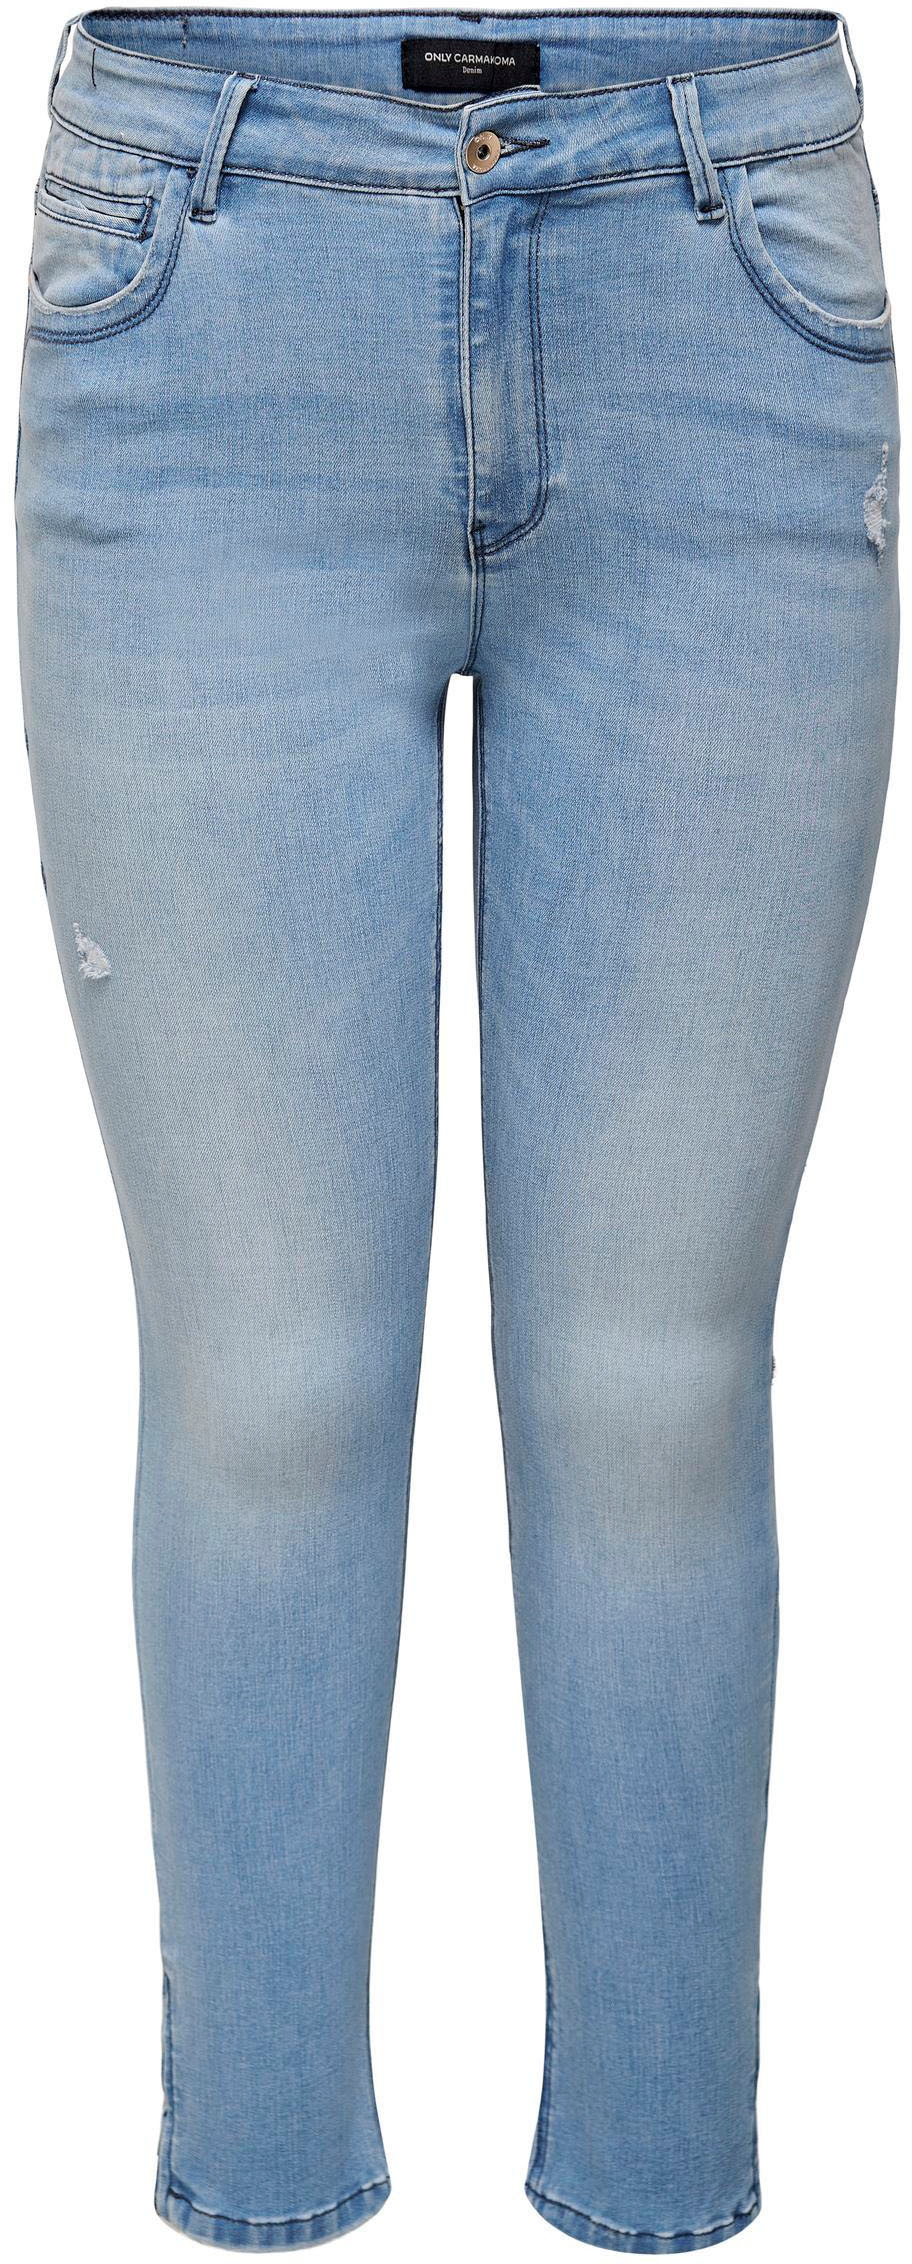 ♕ ONLY SK DNM REG CARMAKOMA kaufen »CARKARLA BJ759 Skinny-fit-Jeans Effekt Destroyed versandkostenfrei mit NOOS«, ANK